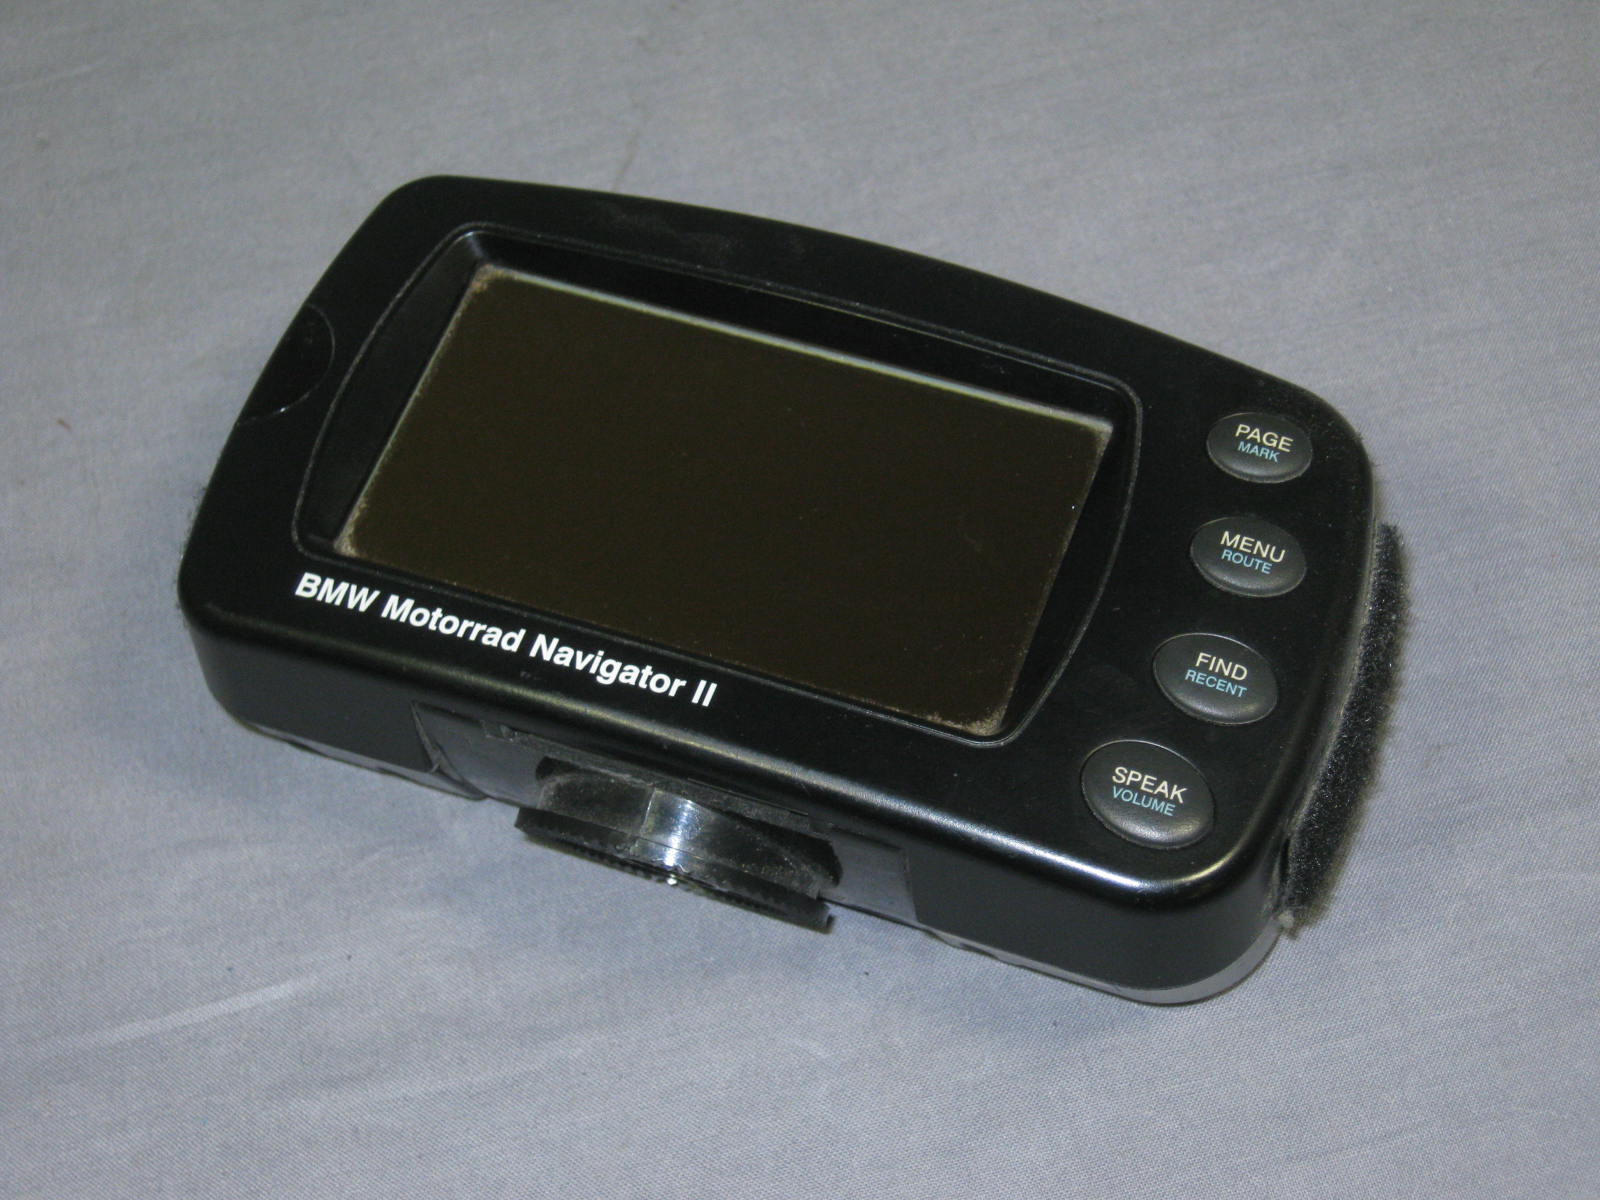 BMW Motorrad Navigator II GPS Navigation System W/ Cord 1